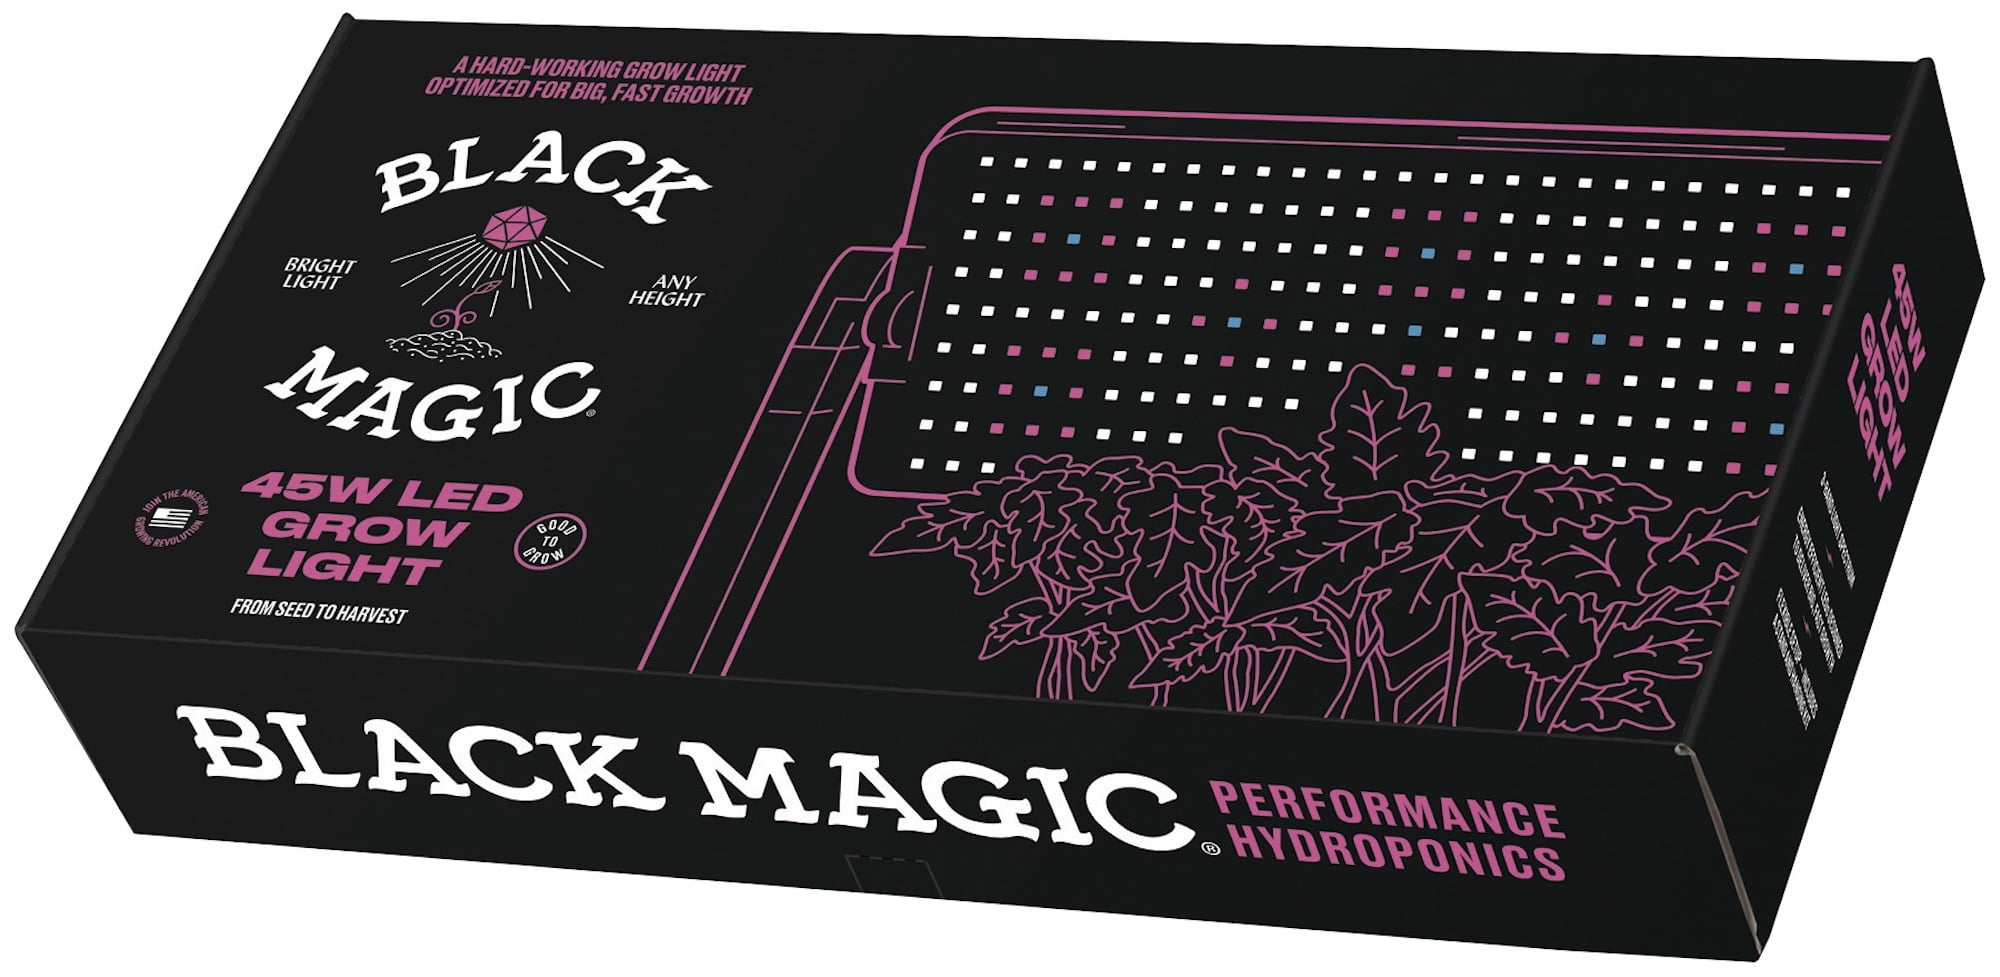 Black Magic 45W LED Grow Light - Band-Light Spectrum - Walmart.com